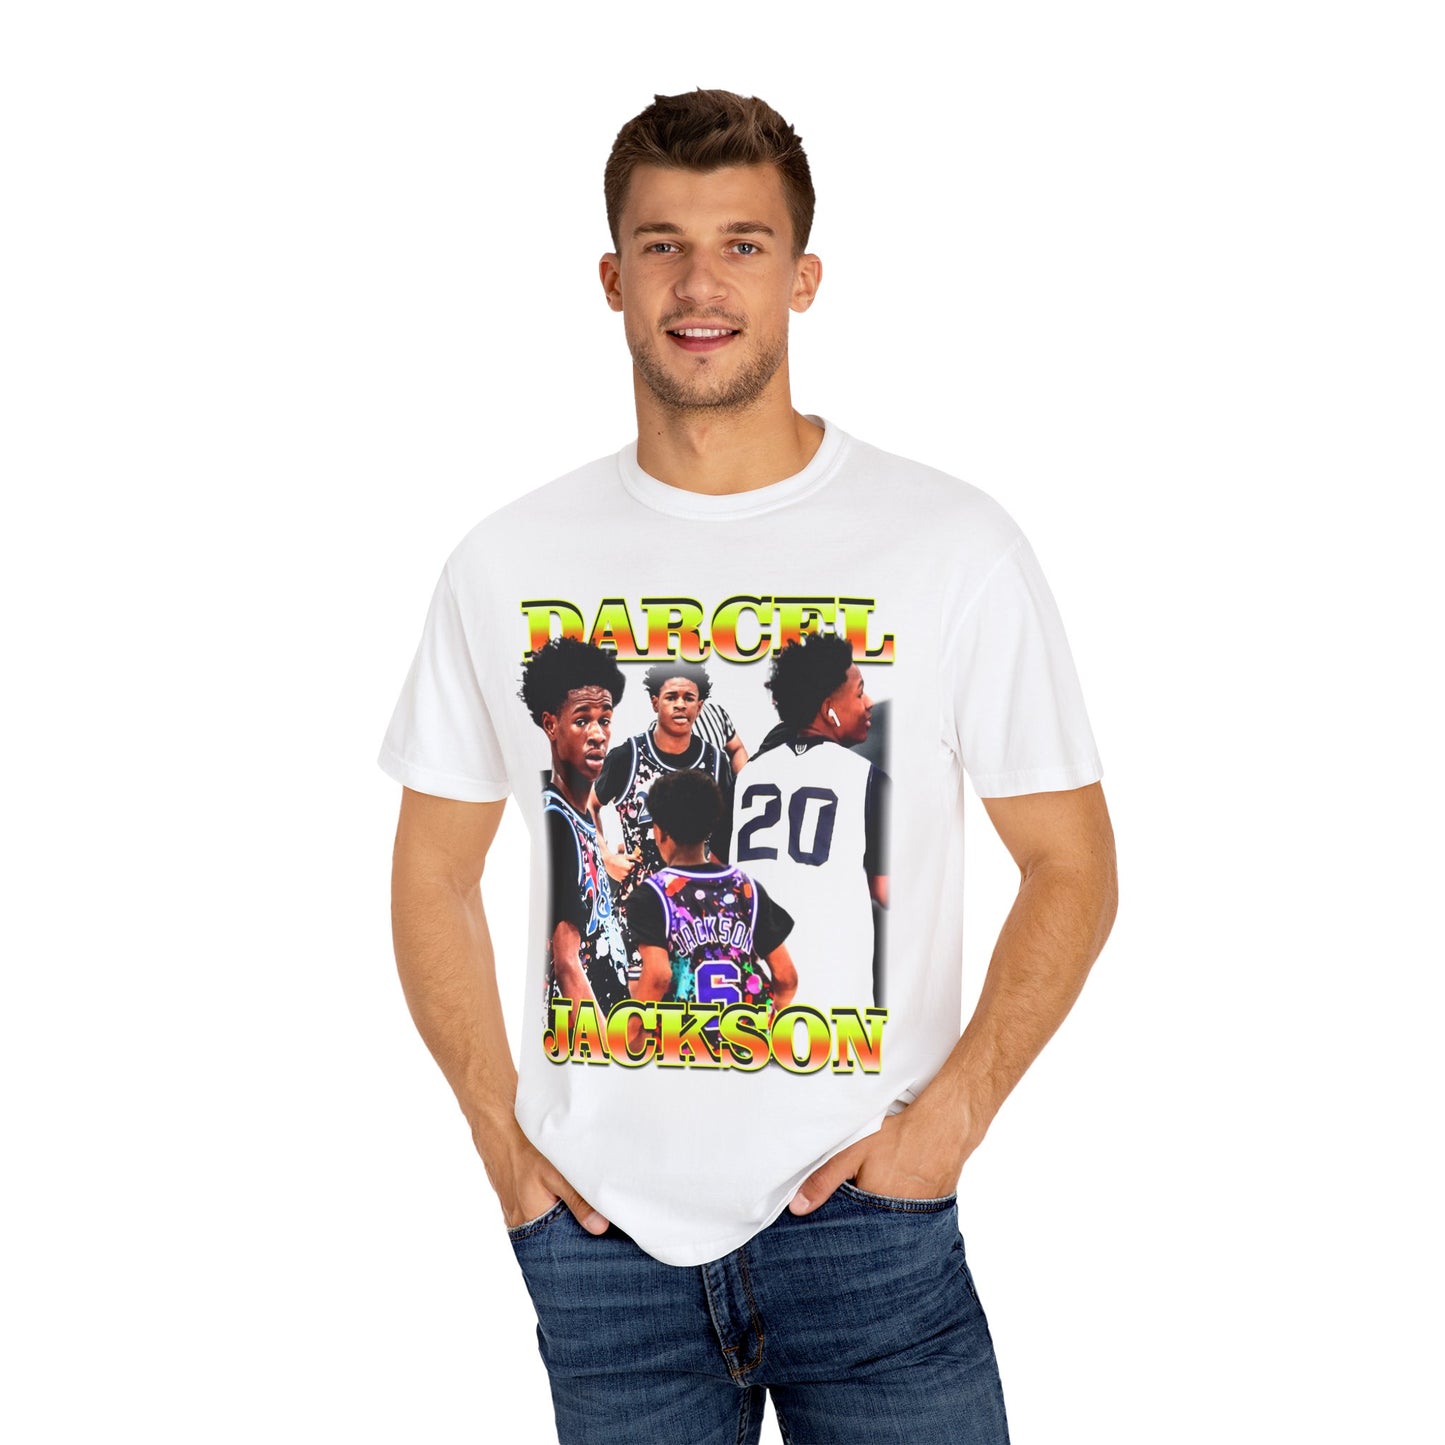 Darcel Jackson Graphic T-shirt